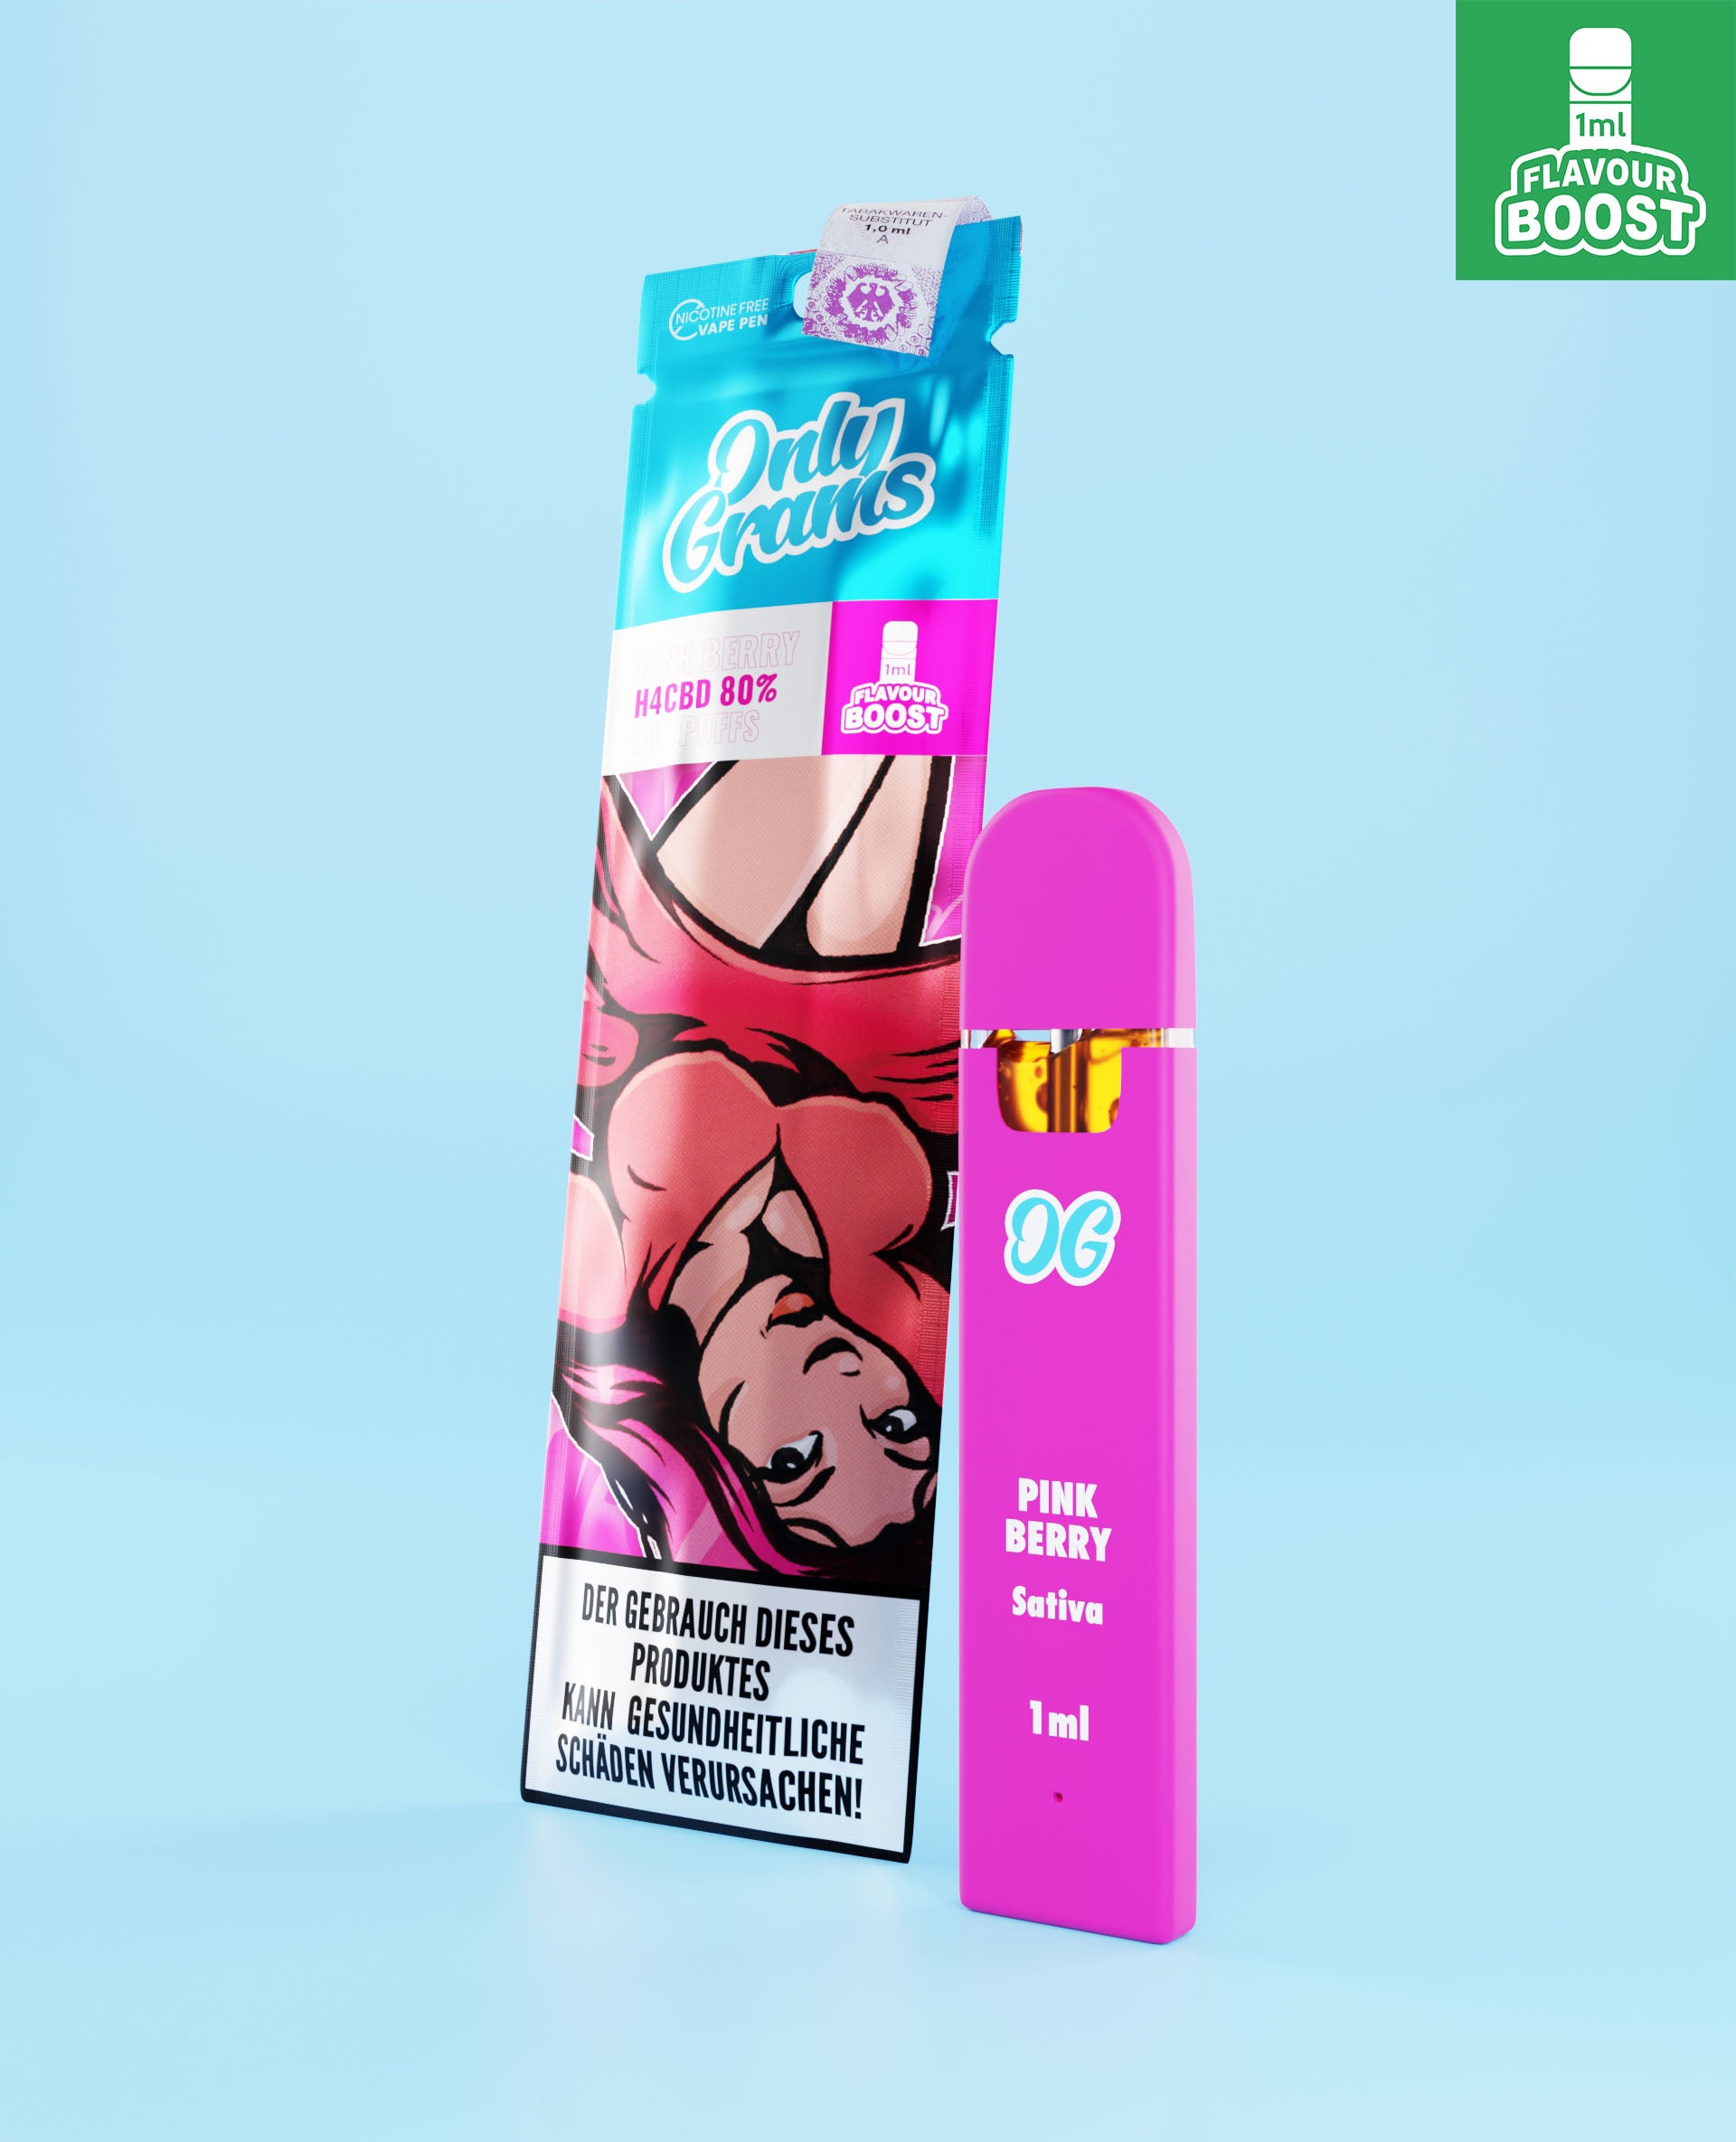 H4CBD Vape Disposable | Pink Berry (Sativa) | Flavor boost